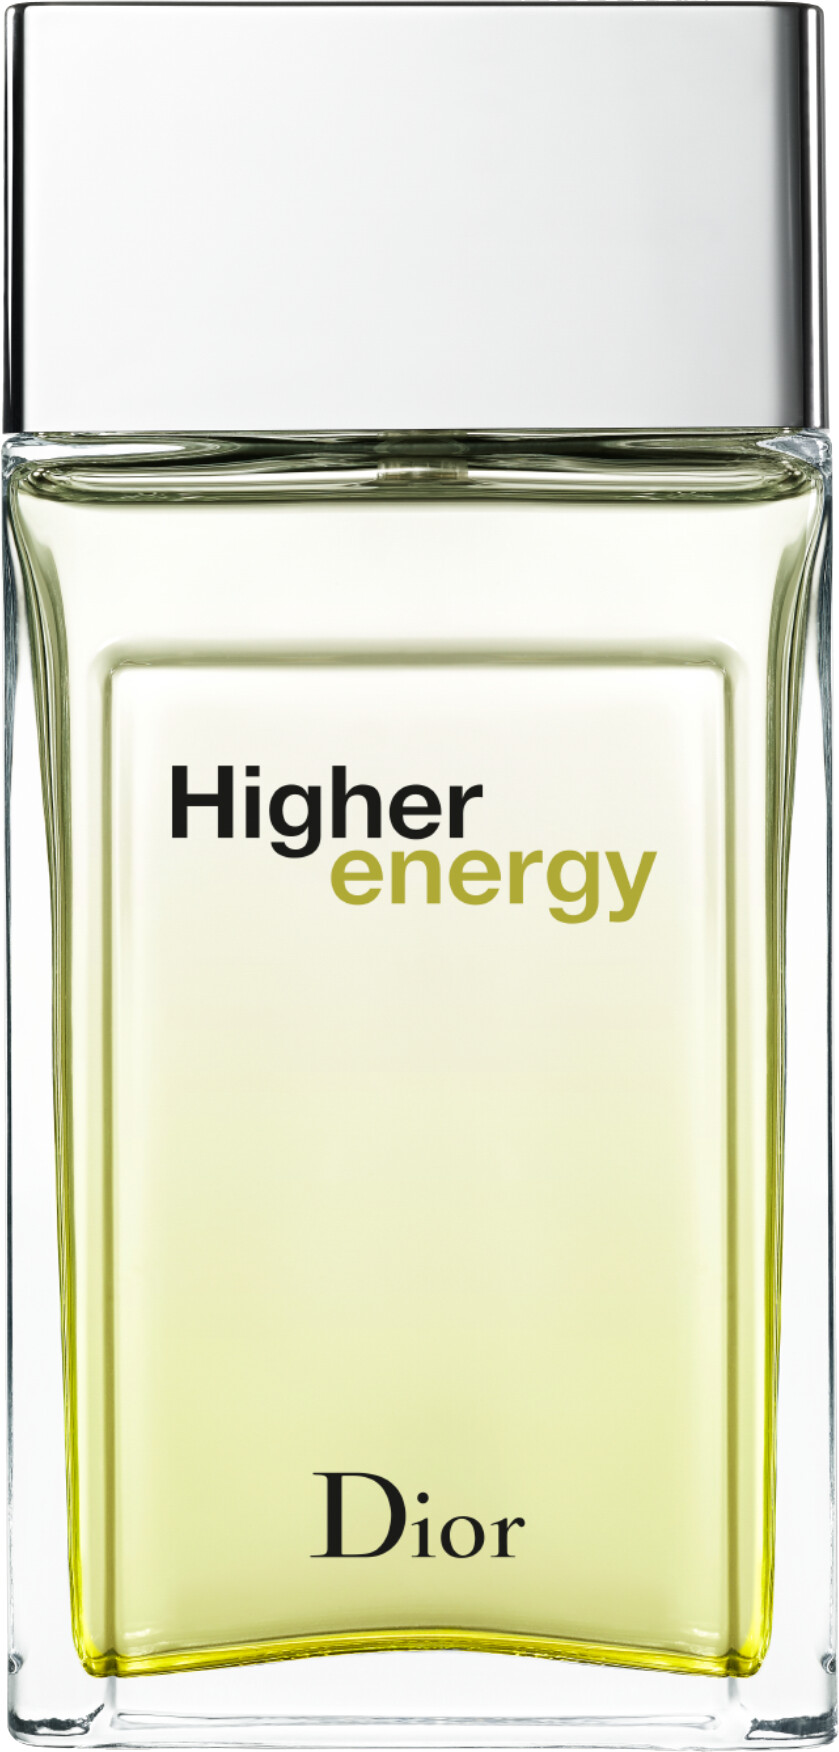 higher energy dior 100ml price